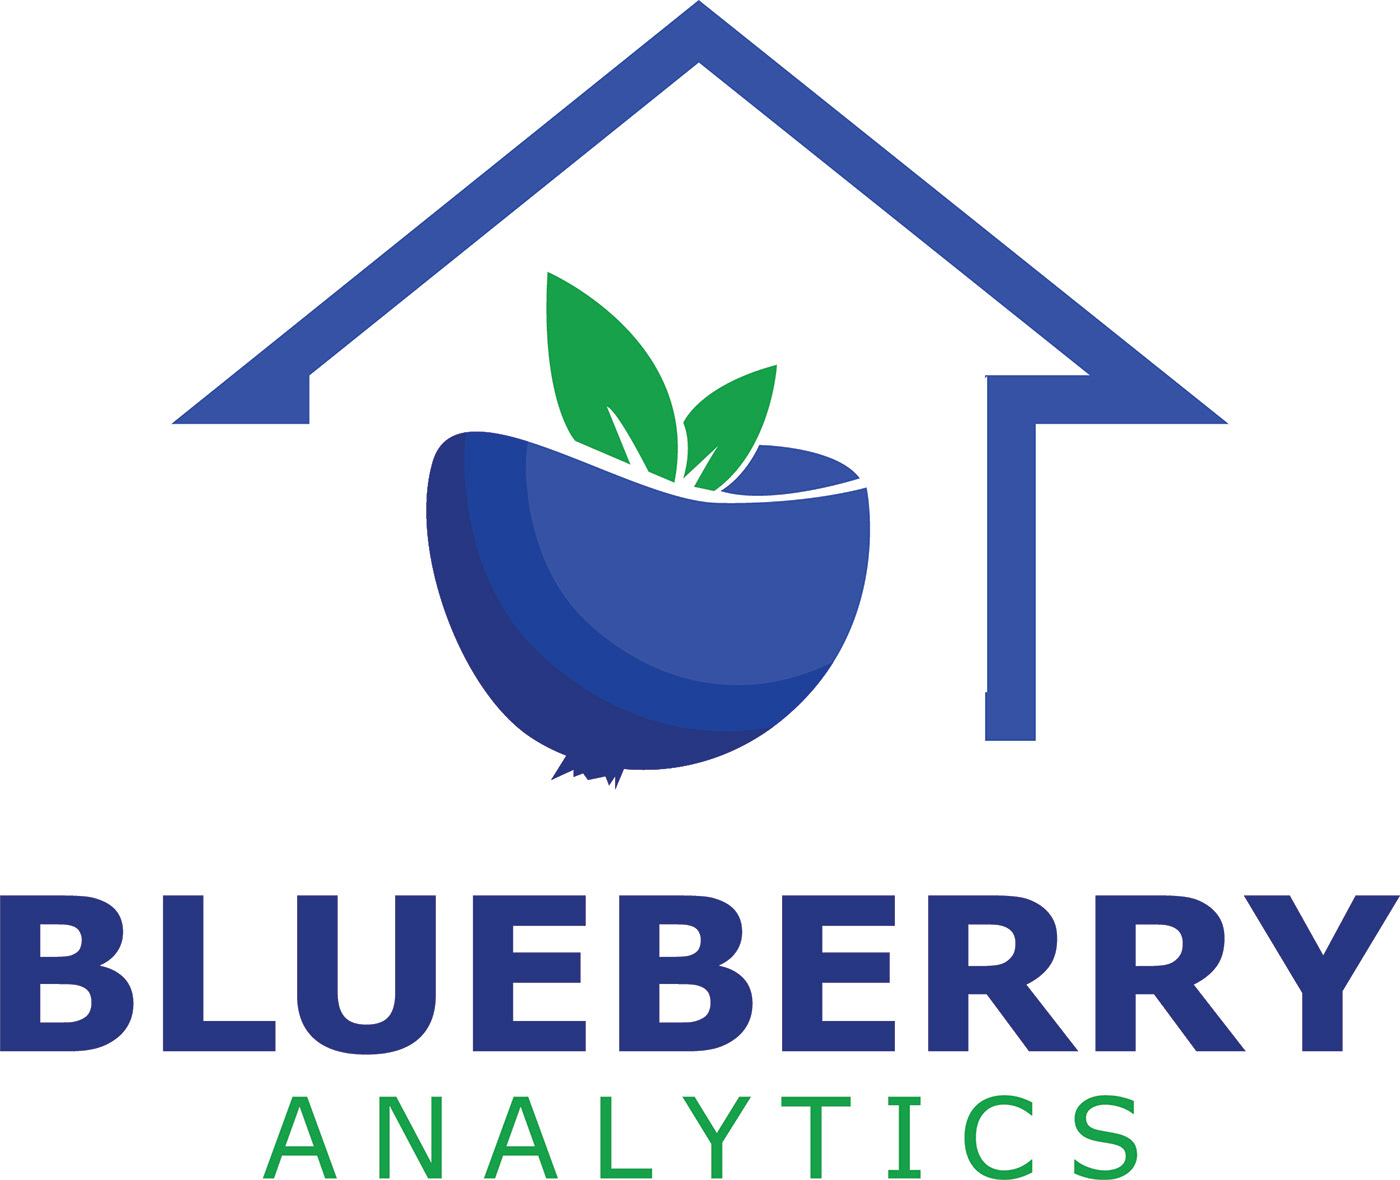 blueberry logo vector blueberry phone logo blackberry logo burberry logo berries logo berry plastics logo berry logo vector berry college logo logo